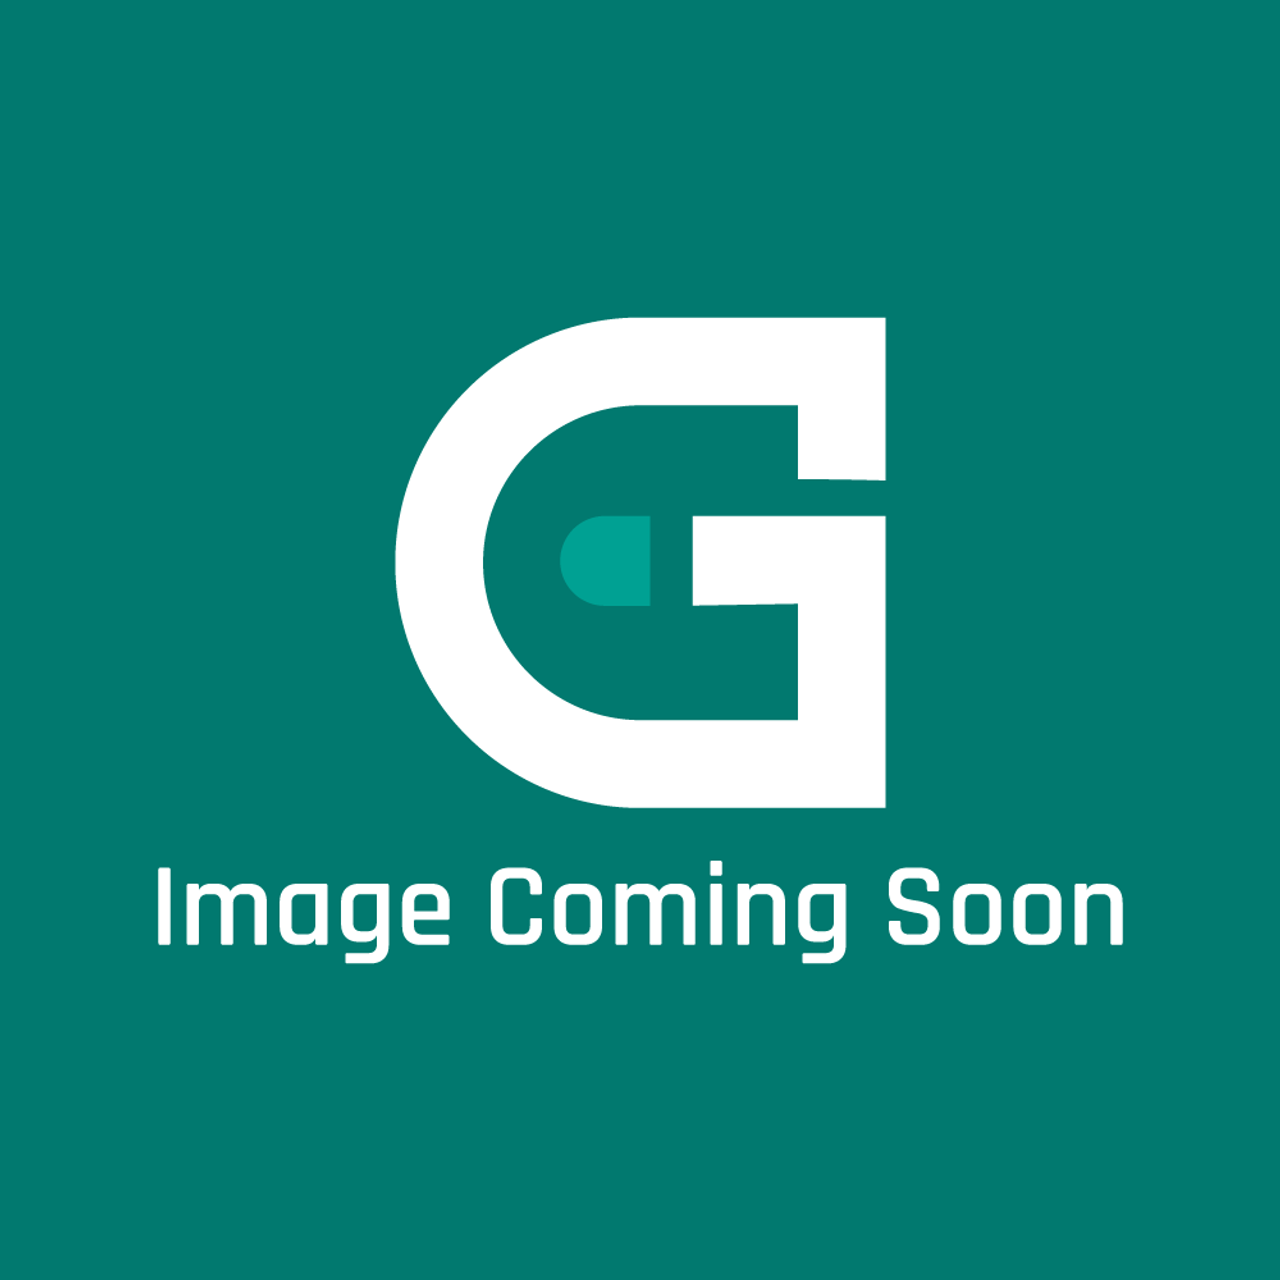 GE Appliances 23C07 - 100483-54 Mtr-Fan 1/8Hp 230V 60Hz 825Rpm - Image Coming Soon!